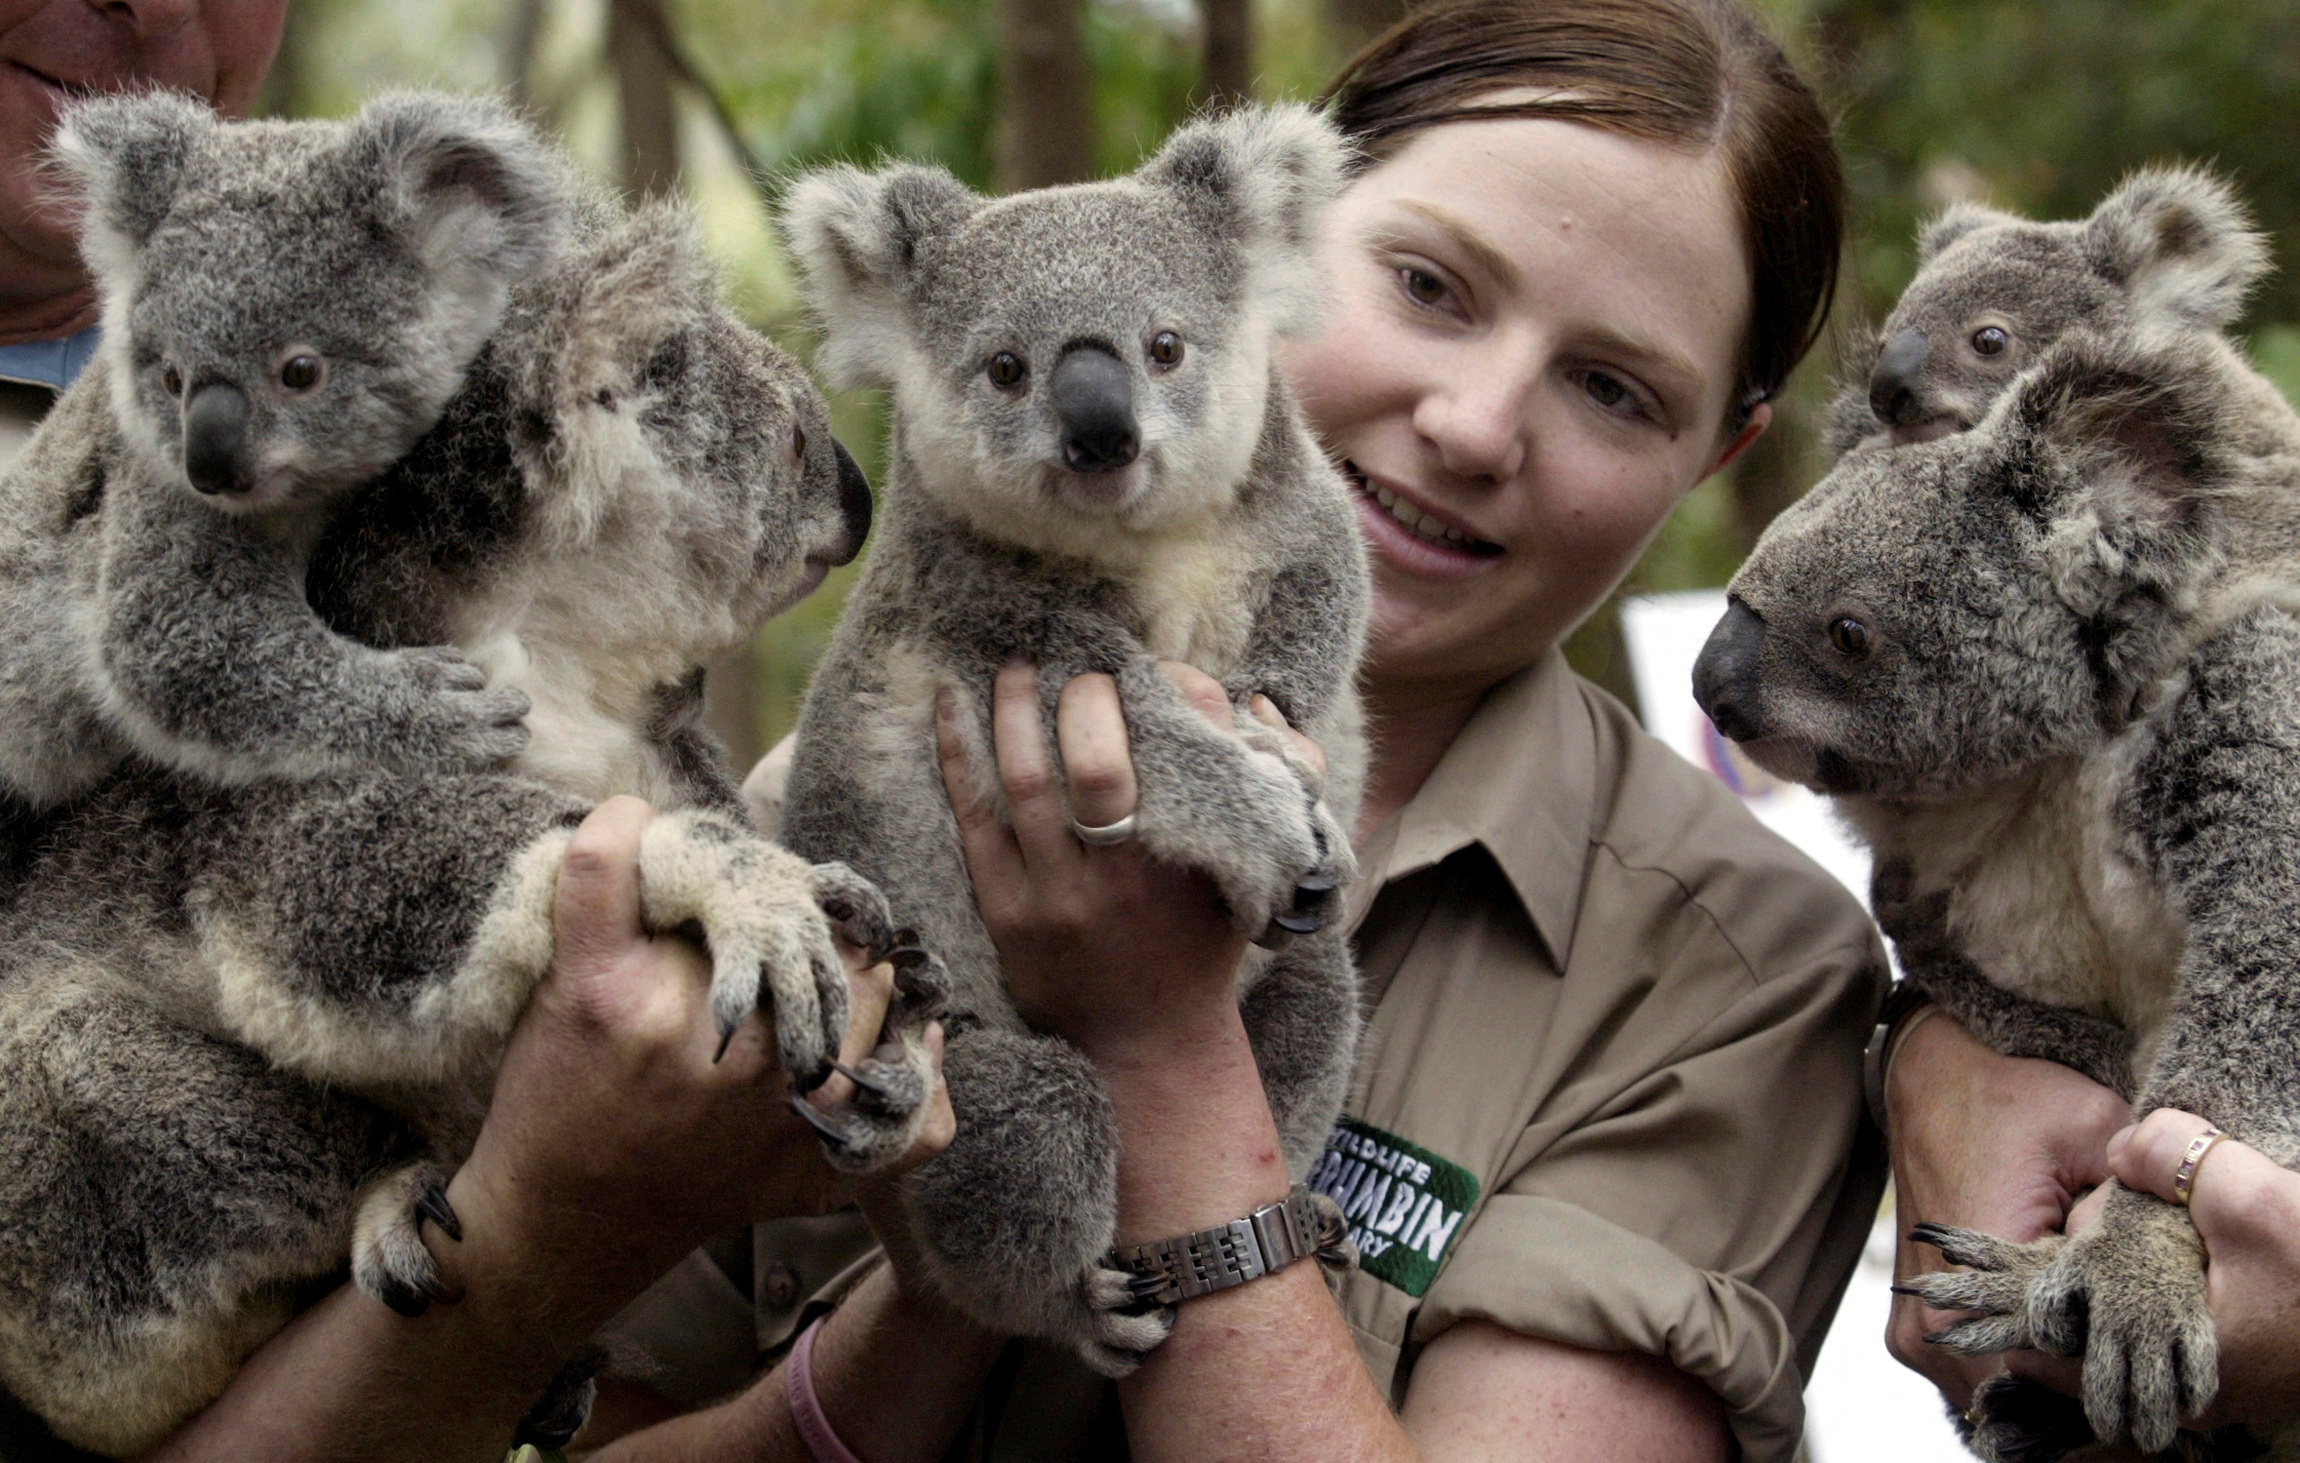 Wildlife officer poses with koalas